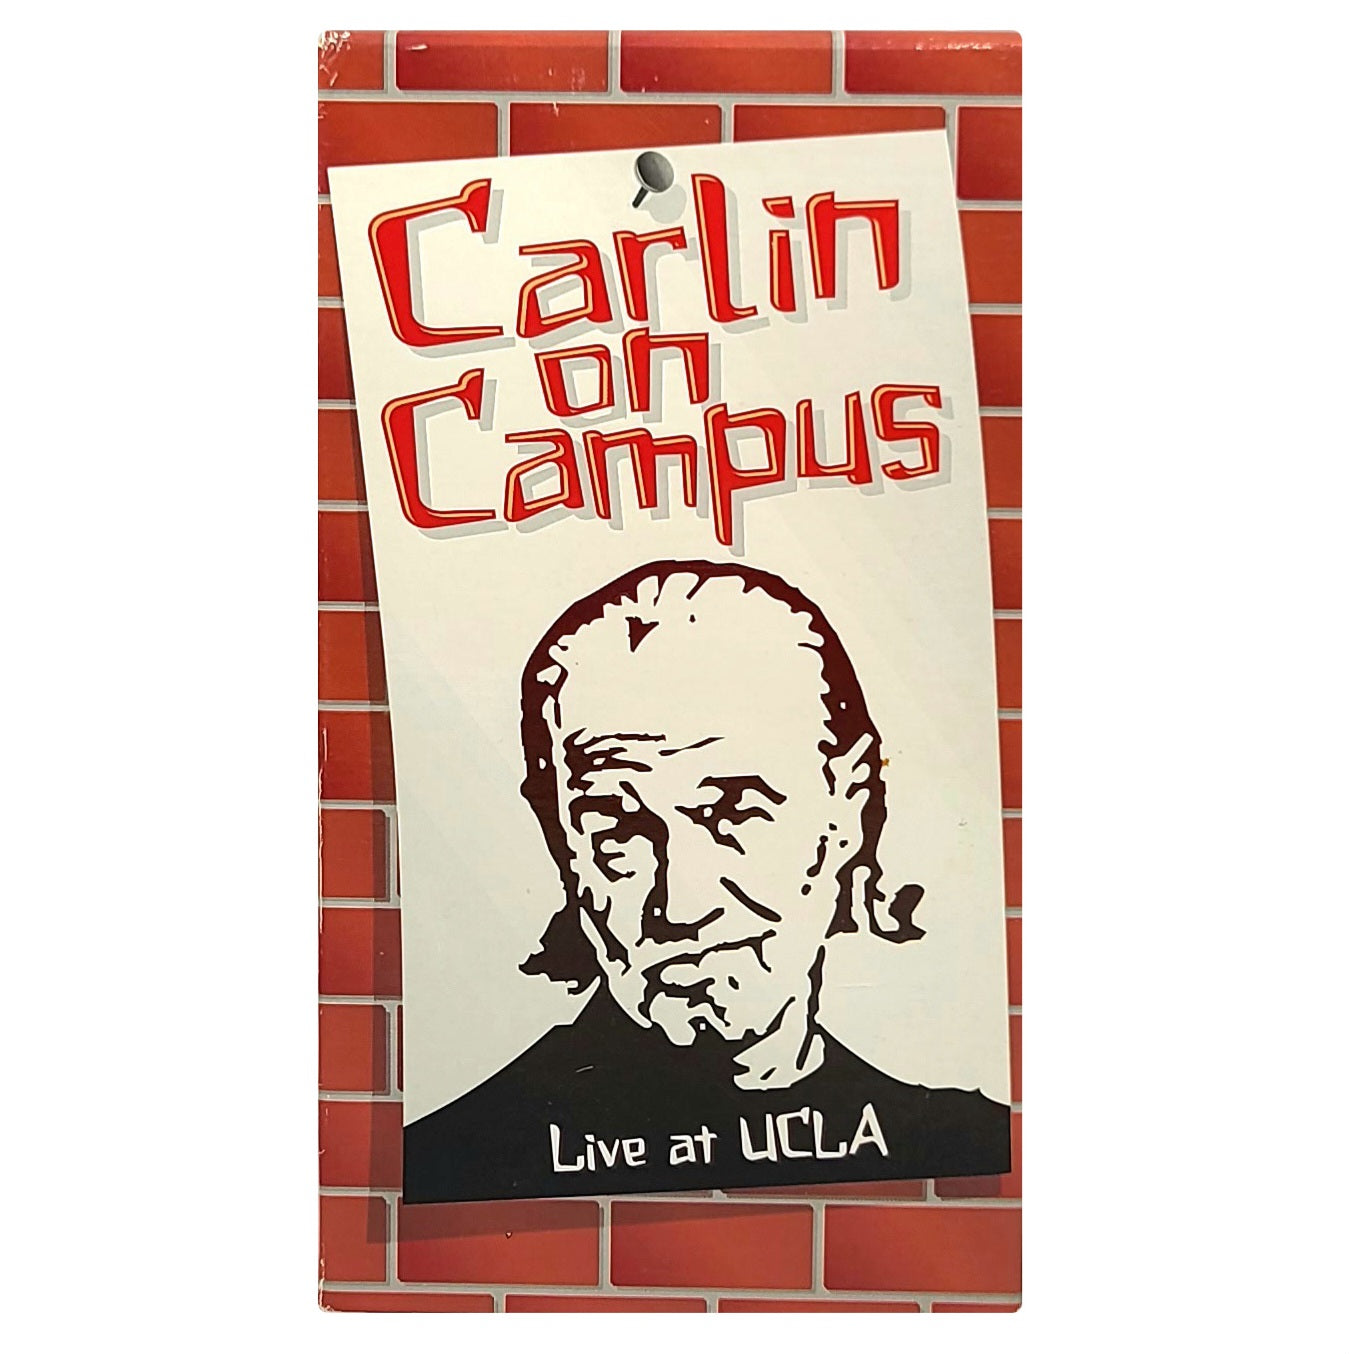 'Carlin On Campus' VHS